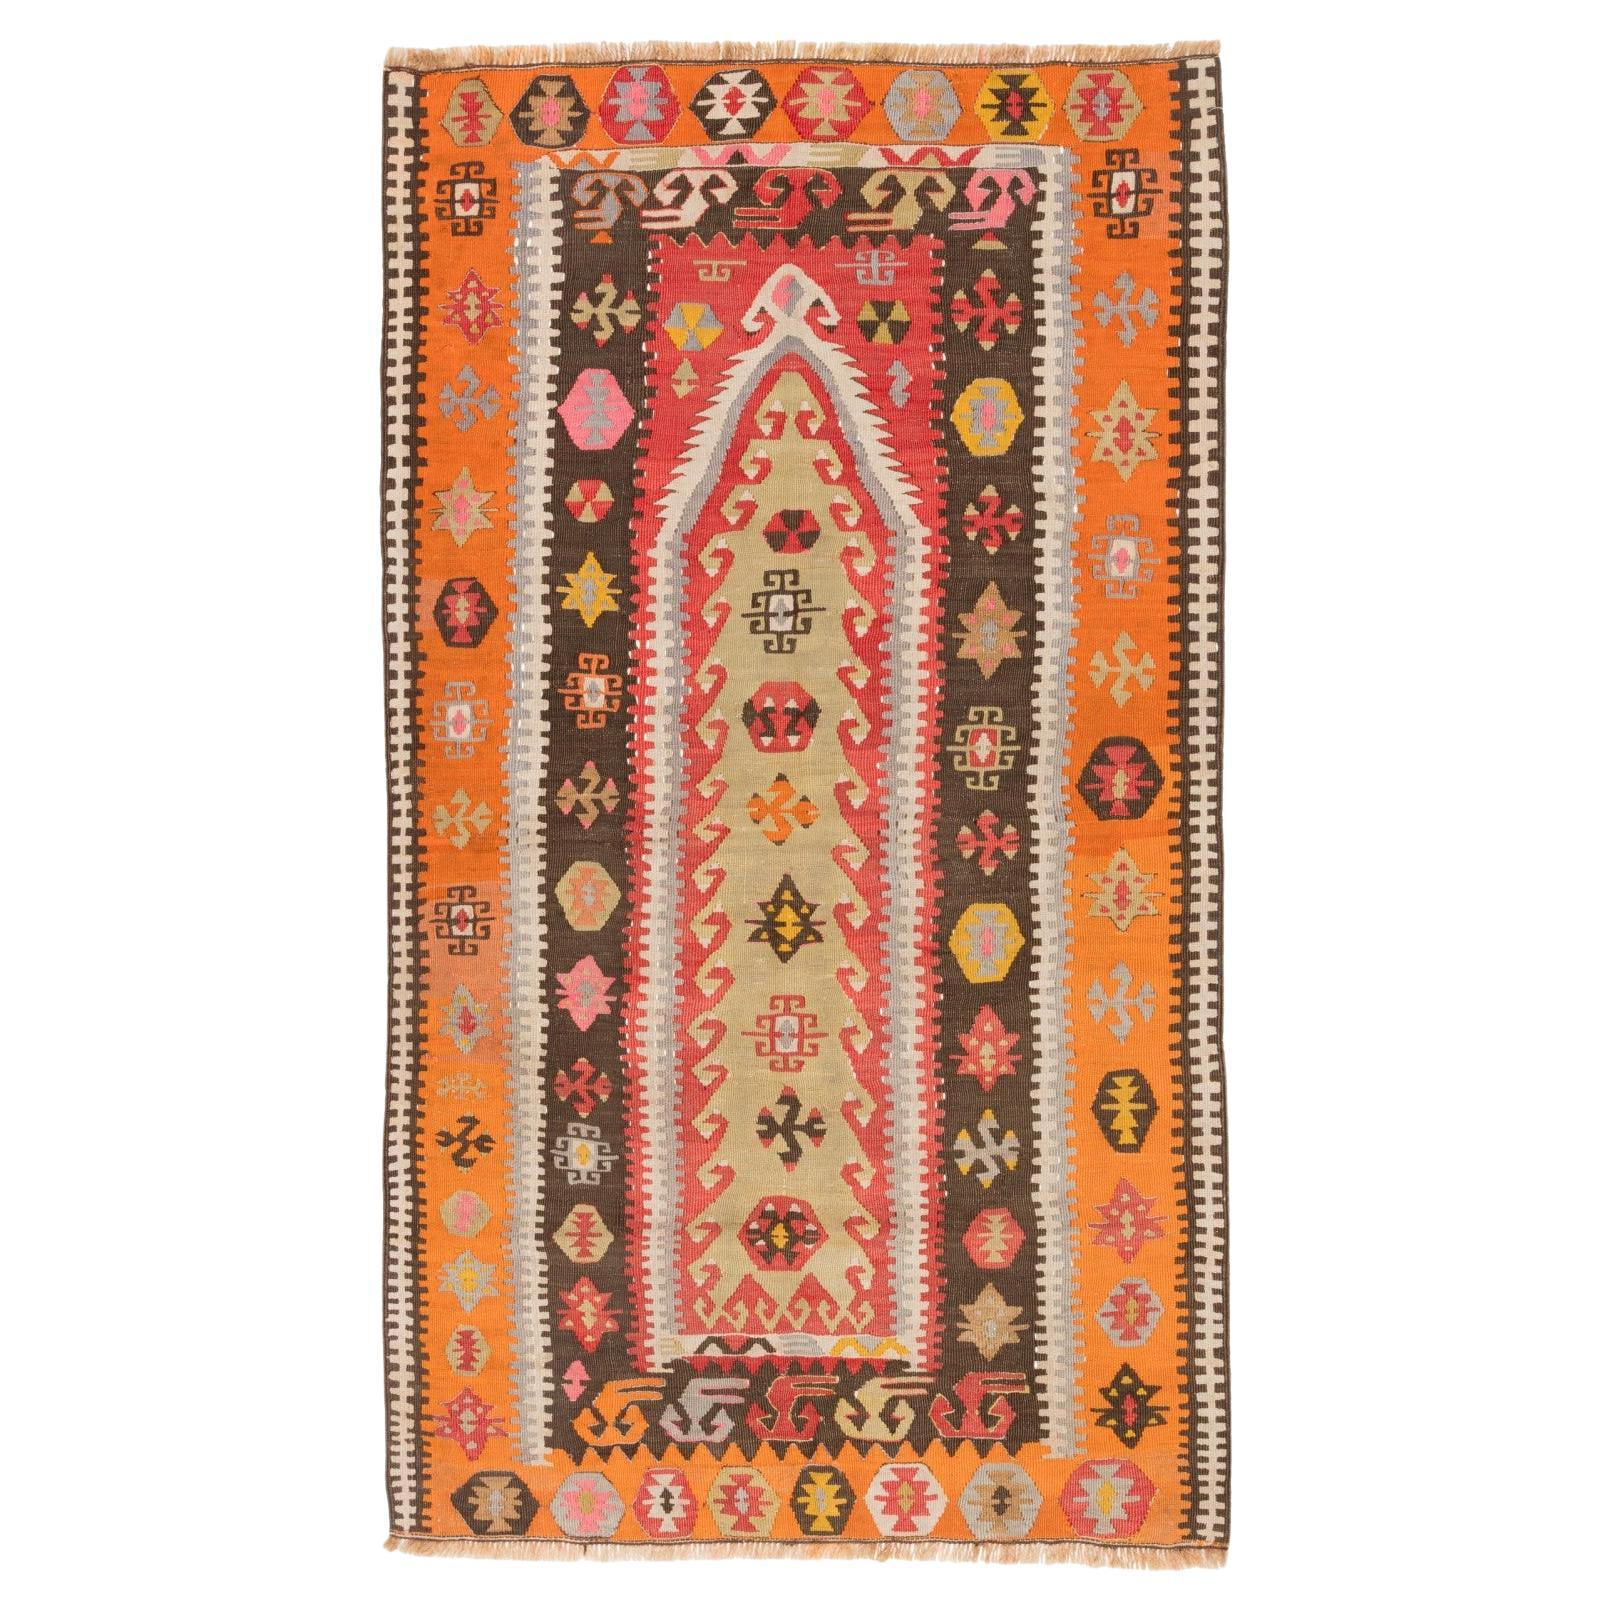 Antique Sivas Kilim Central Anatolian Old Rug Turkish Carpet For Sale